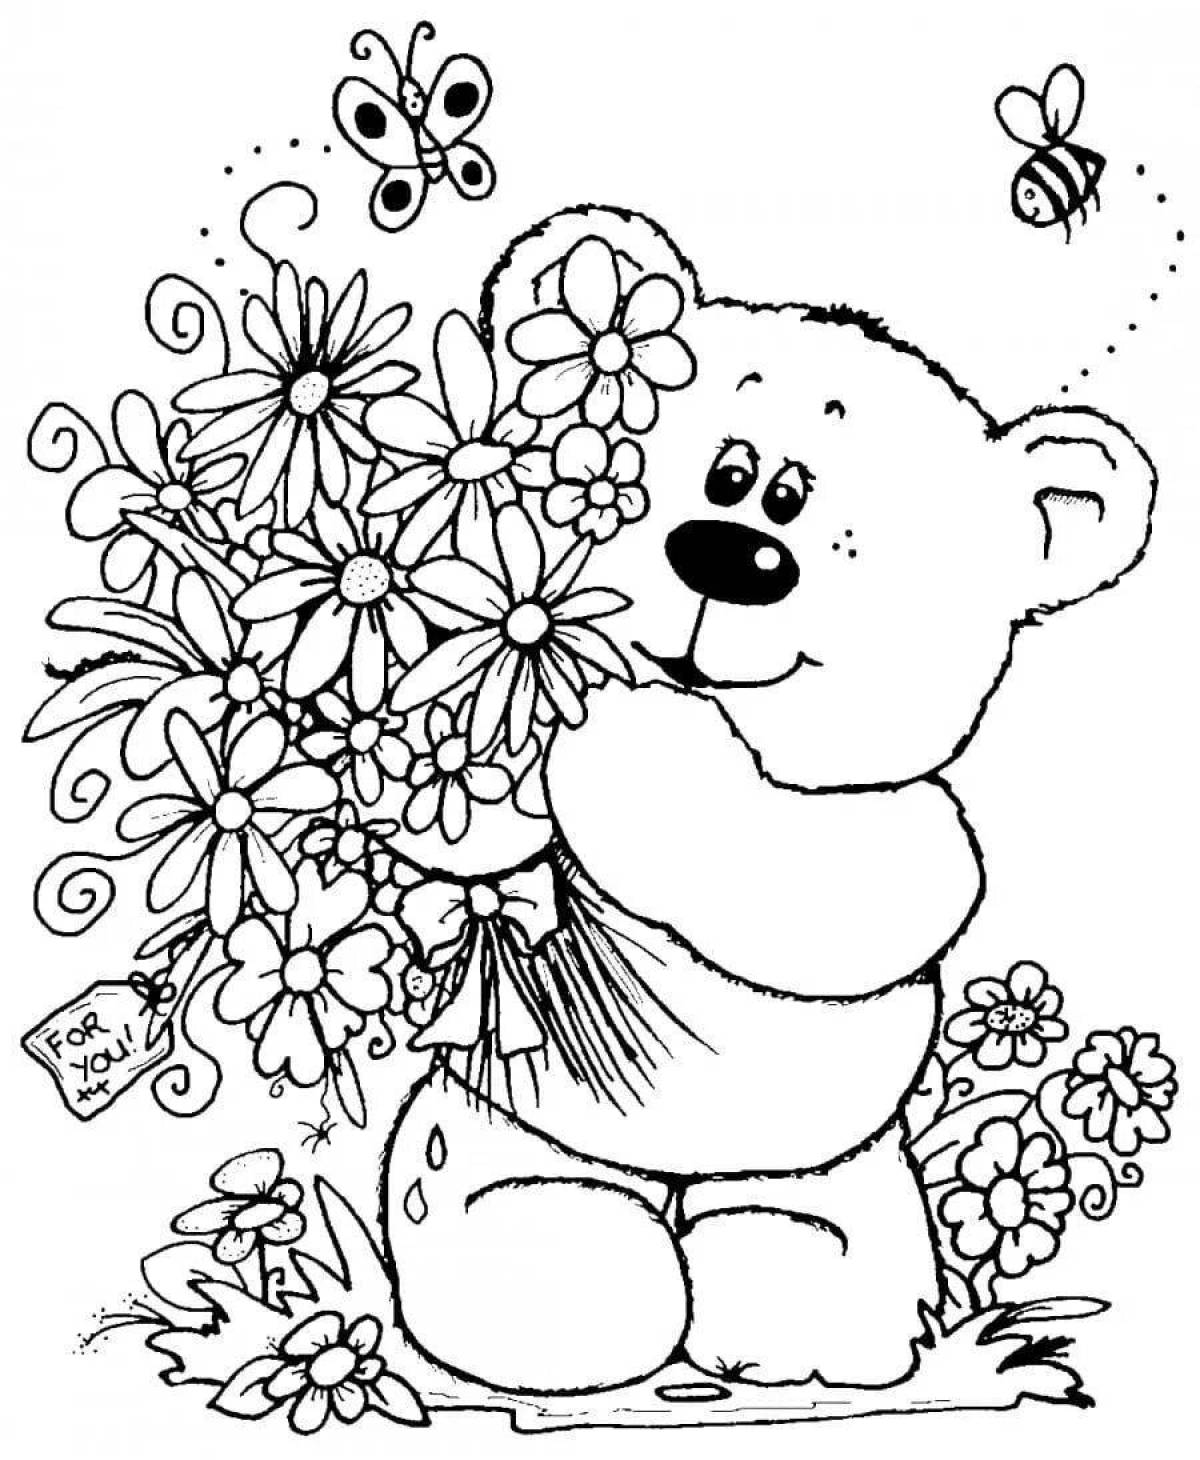 Funny teddy bear with flowers